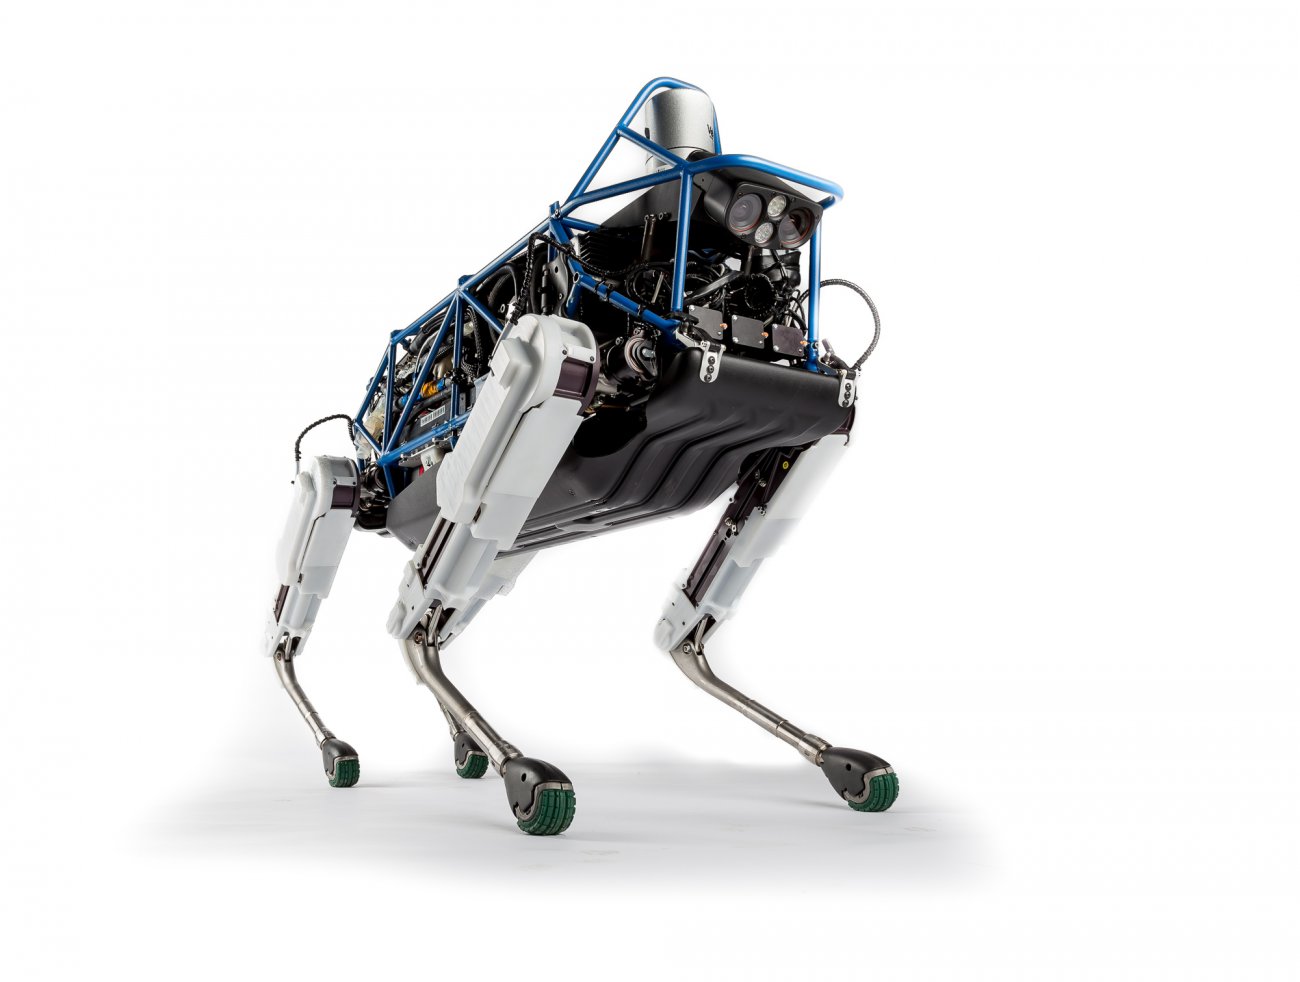 Link to Boston Dynamics Spot Robot Video on YouTube